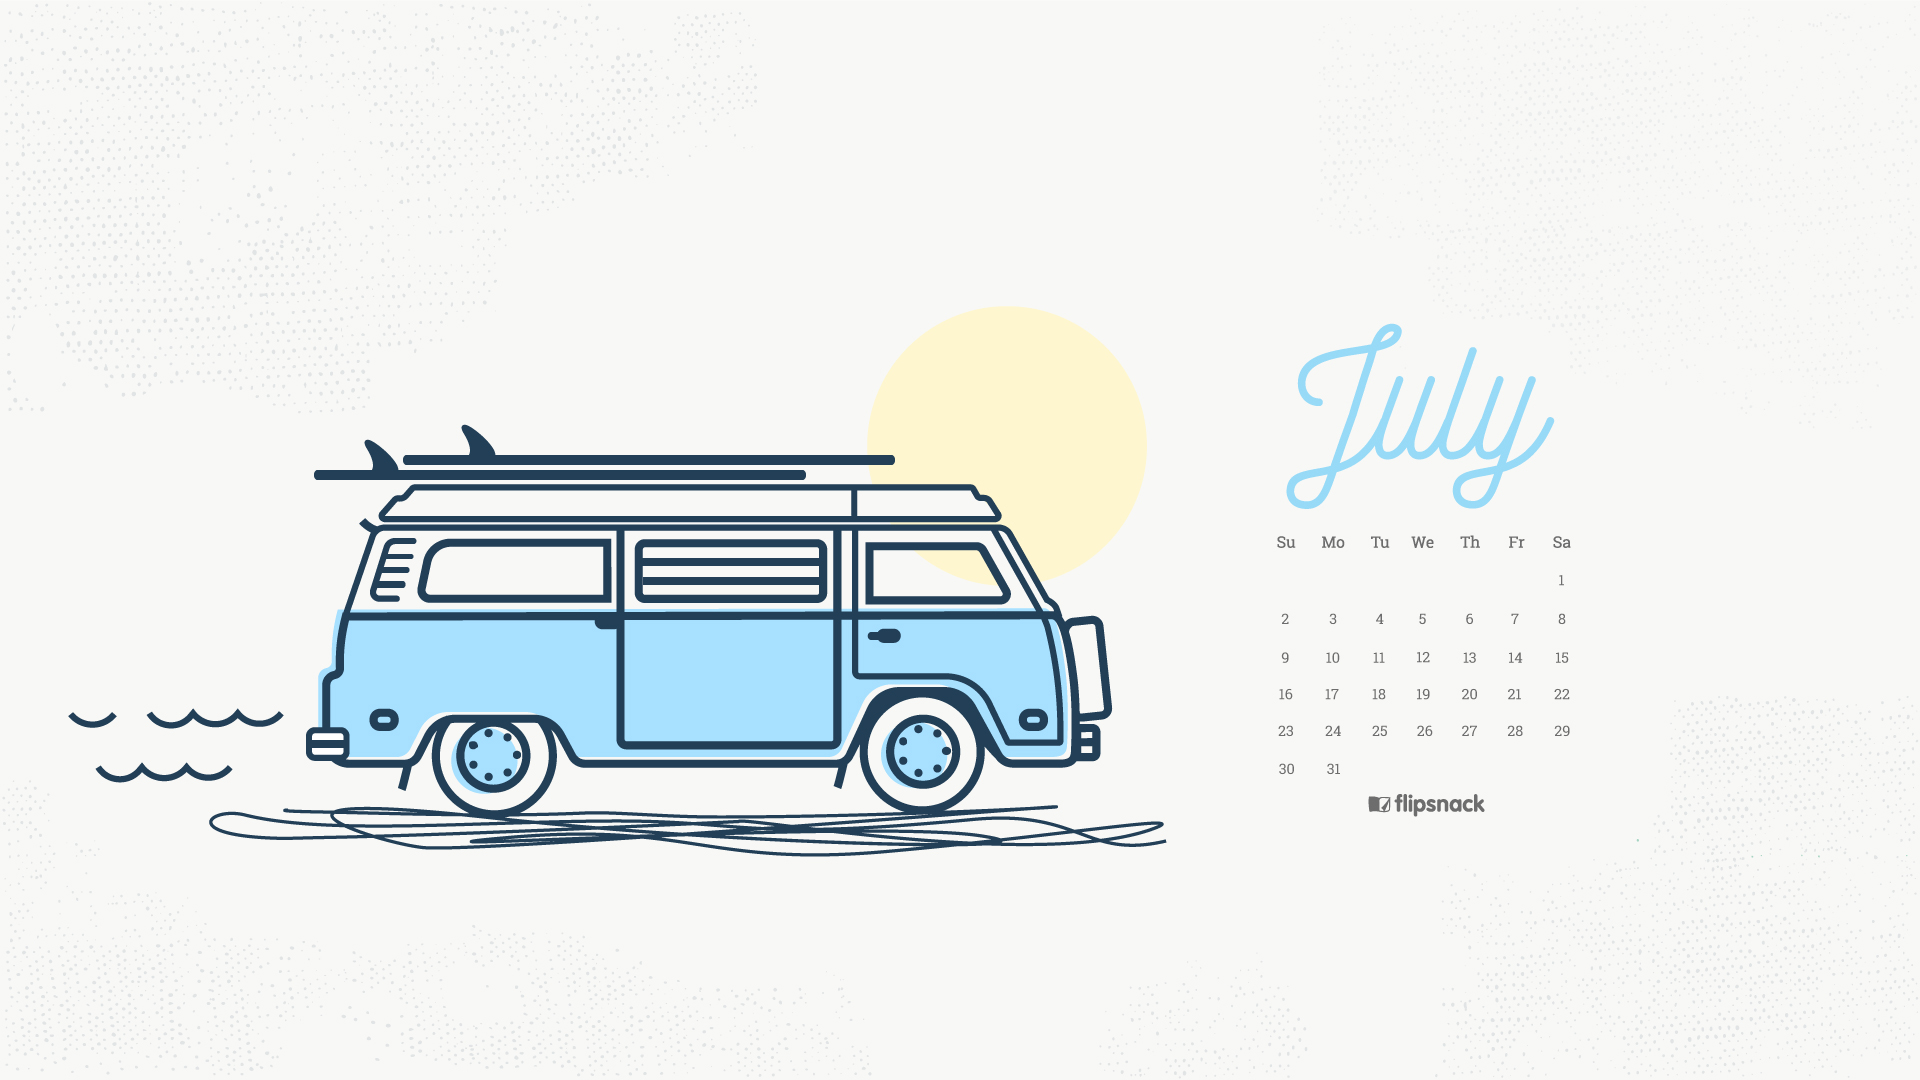 July 2017 calendar wallpaper for desktop background 1920x1080